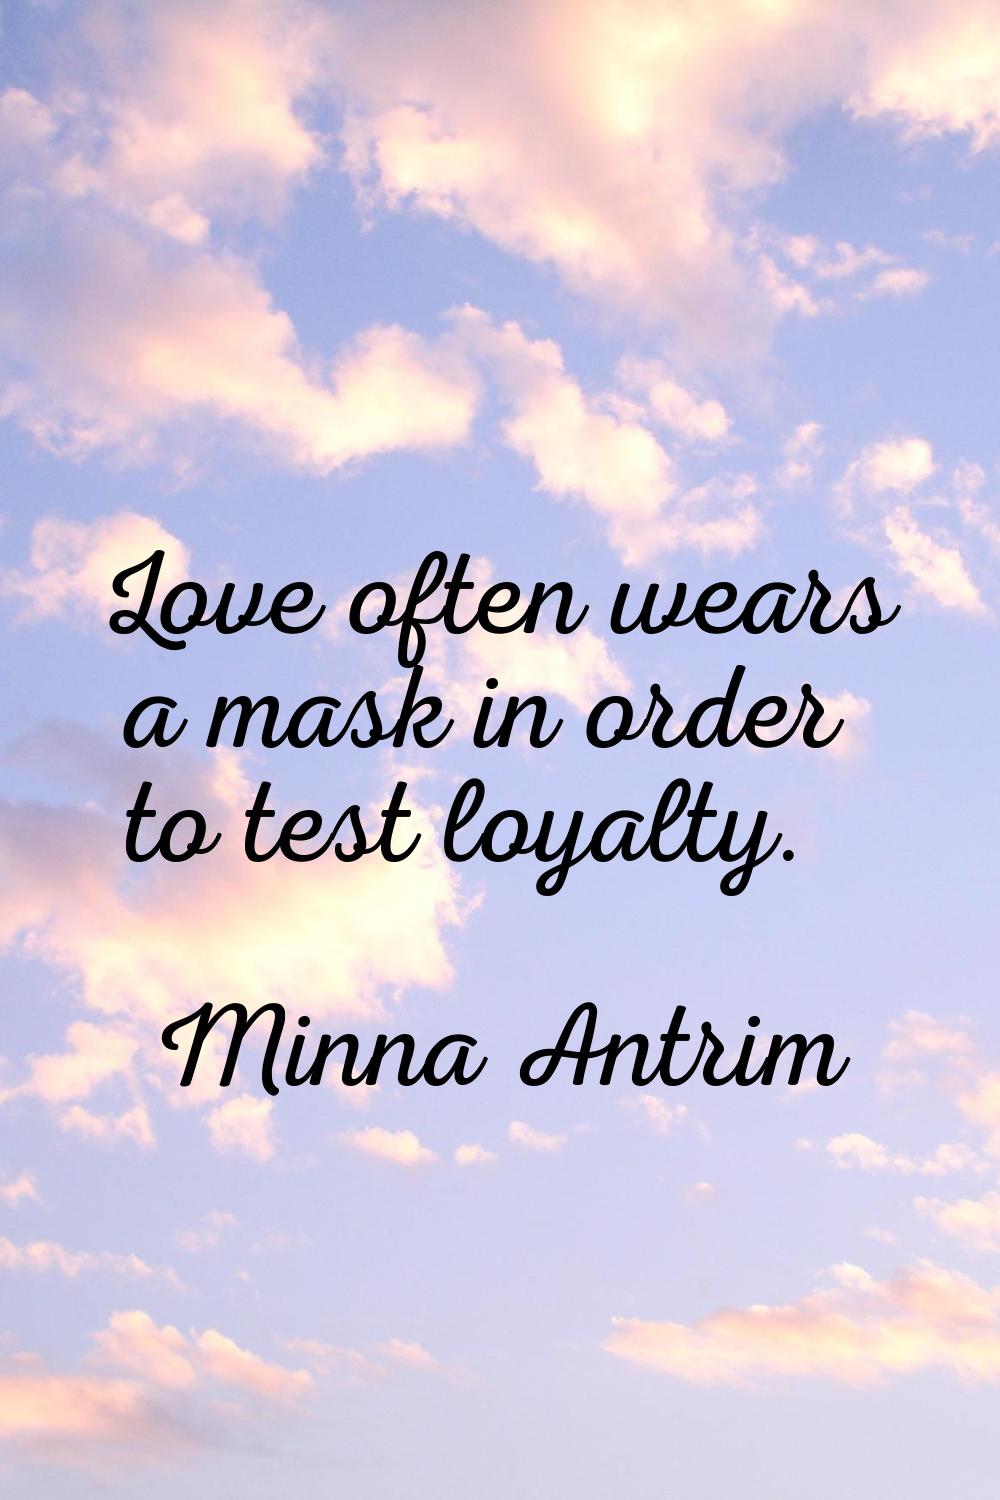 Love often wears a mask in order to test loyalty.